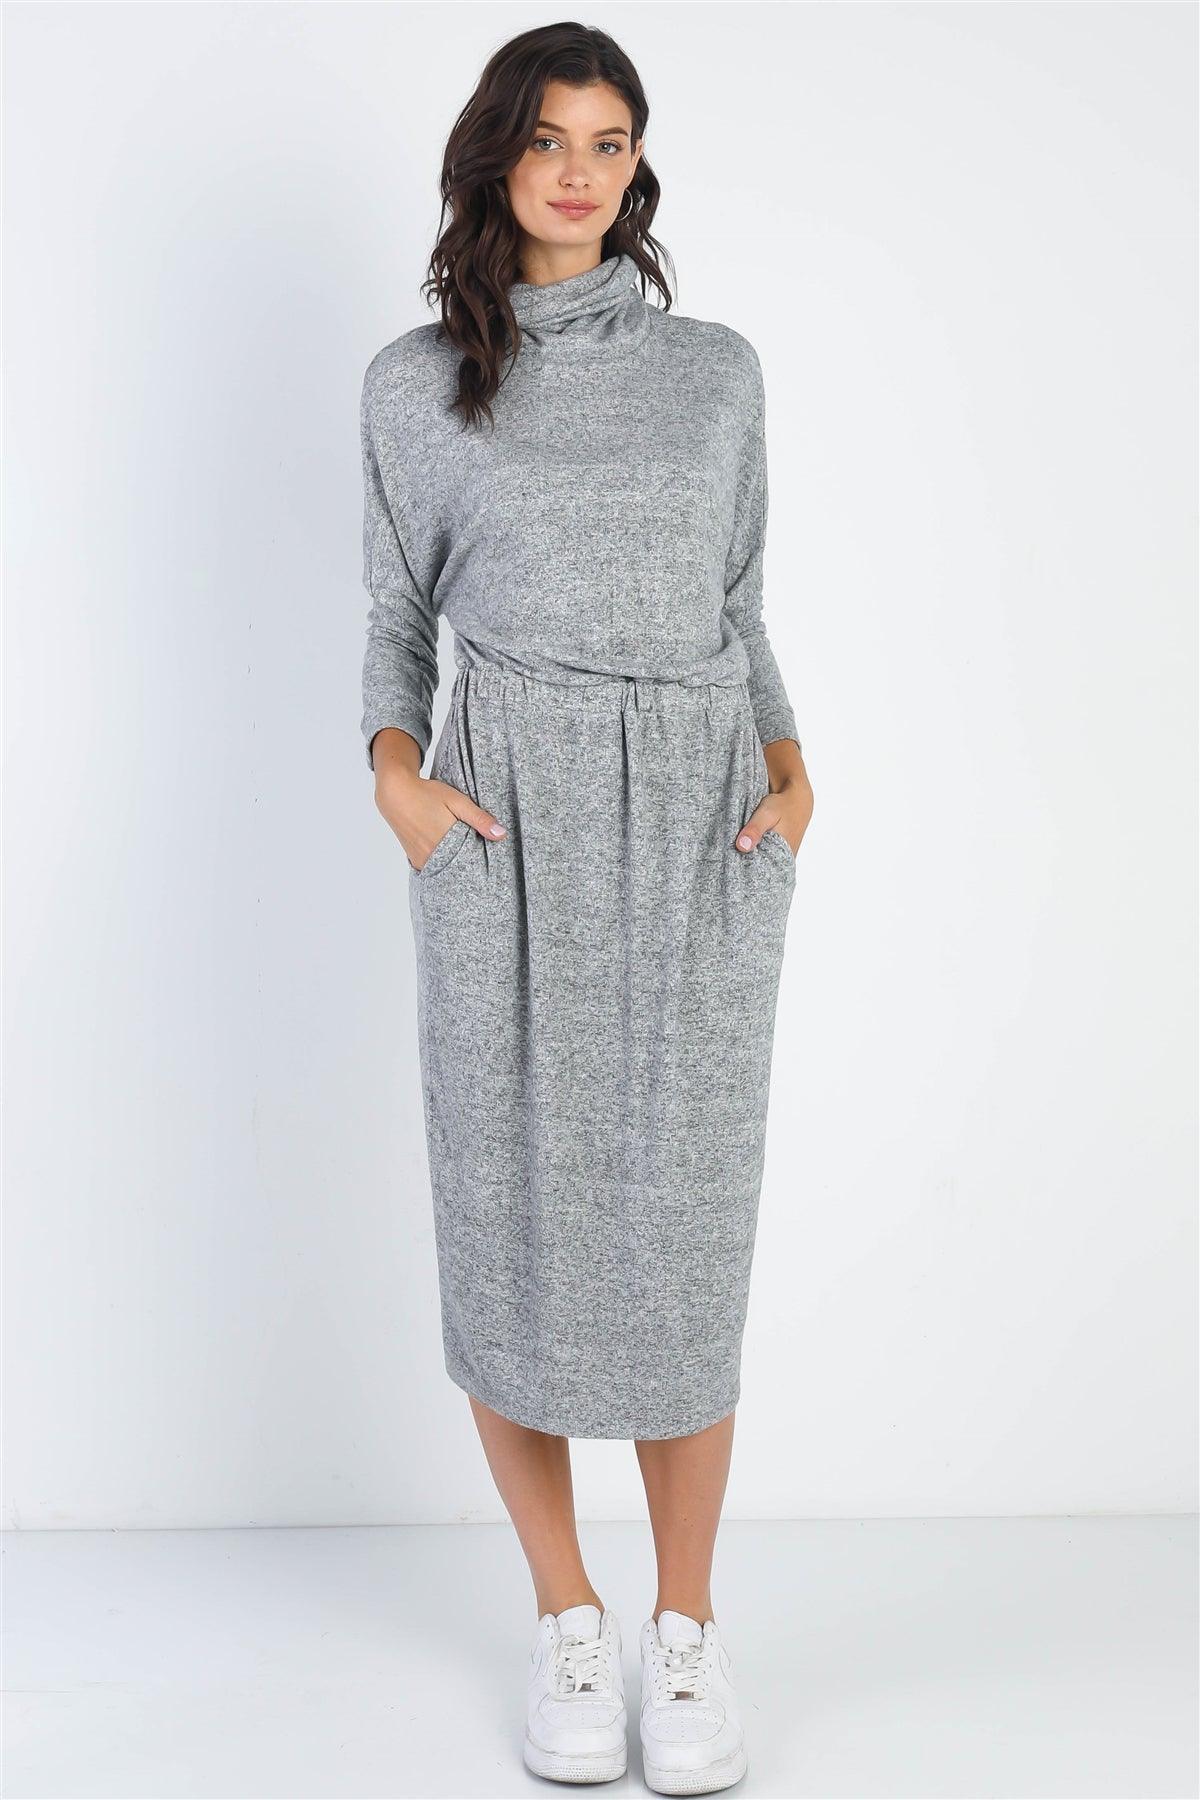 Heather Grey Turtle Neck Long Sleeve Midi Dress /1-1-1